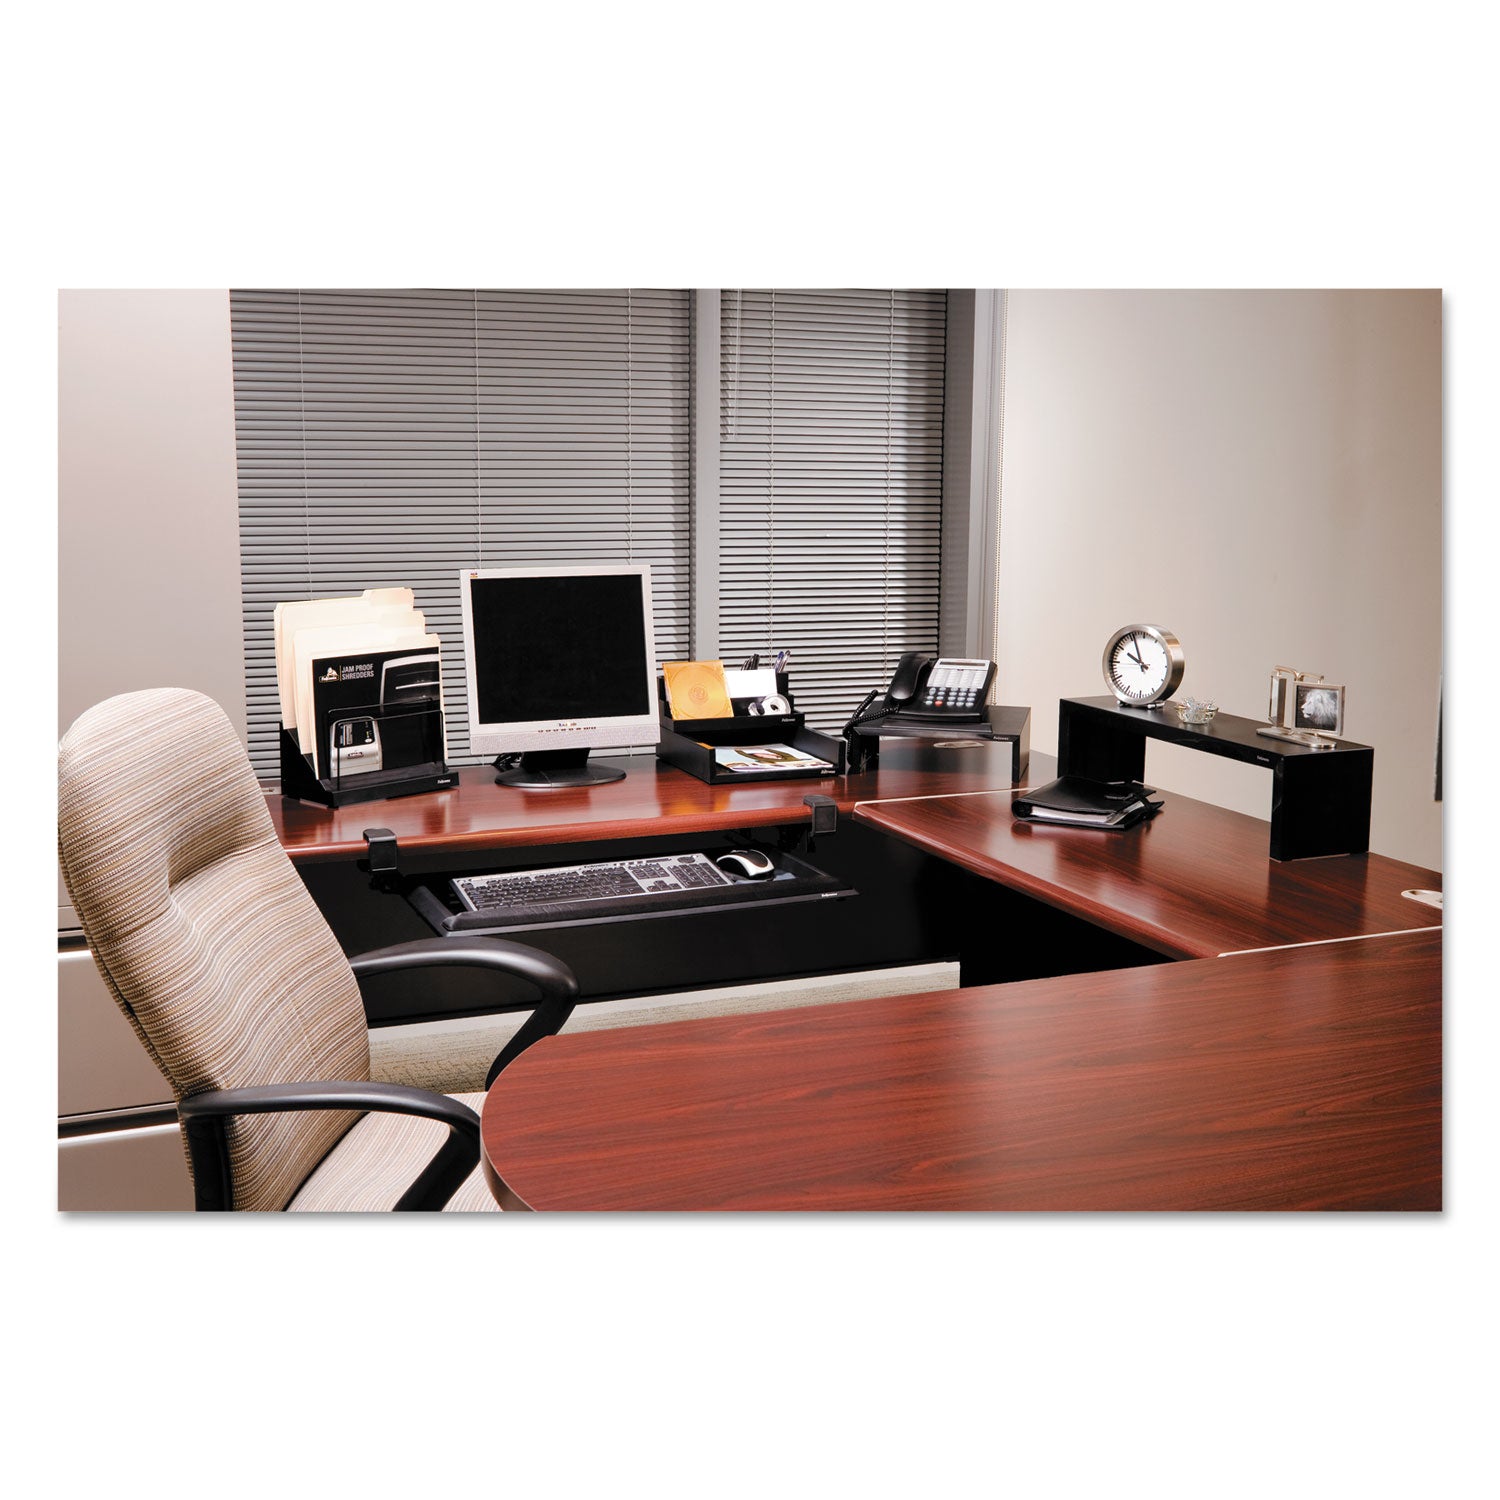 Designer Suites Telephone Stand, 13 x 9.13 x 4.38, Black Pearl - 